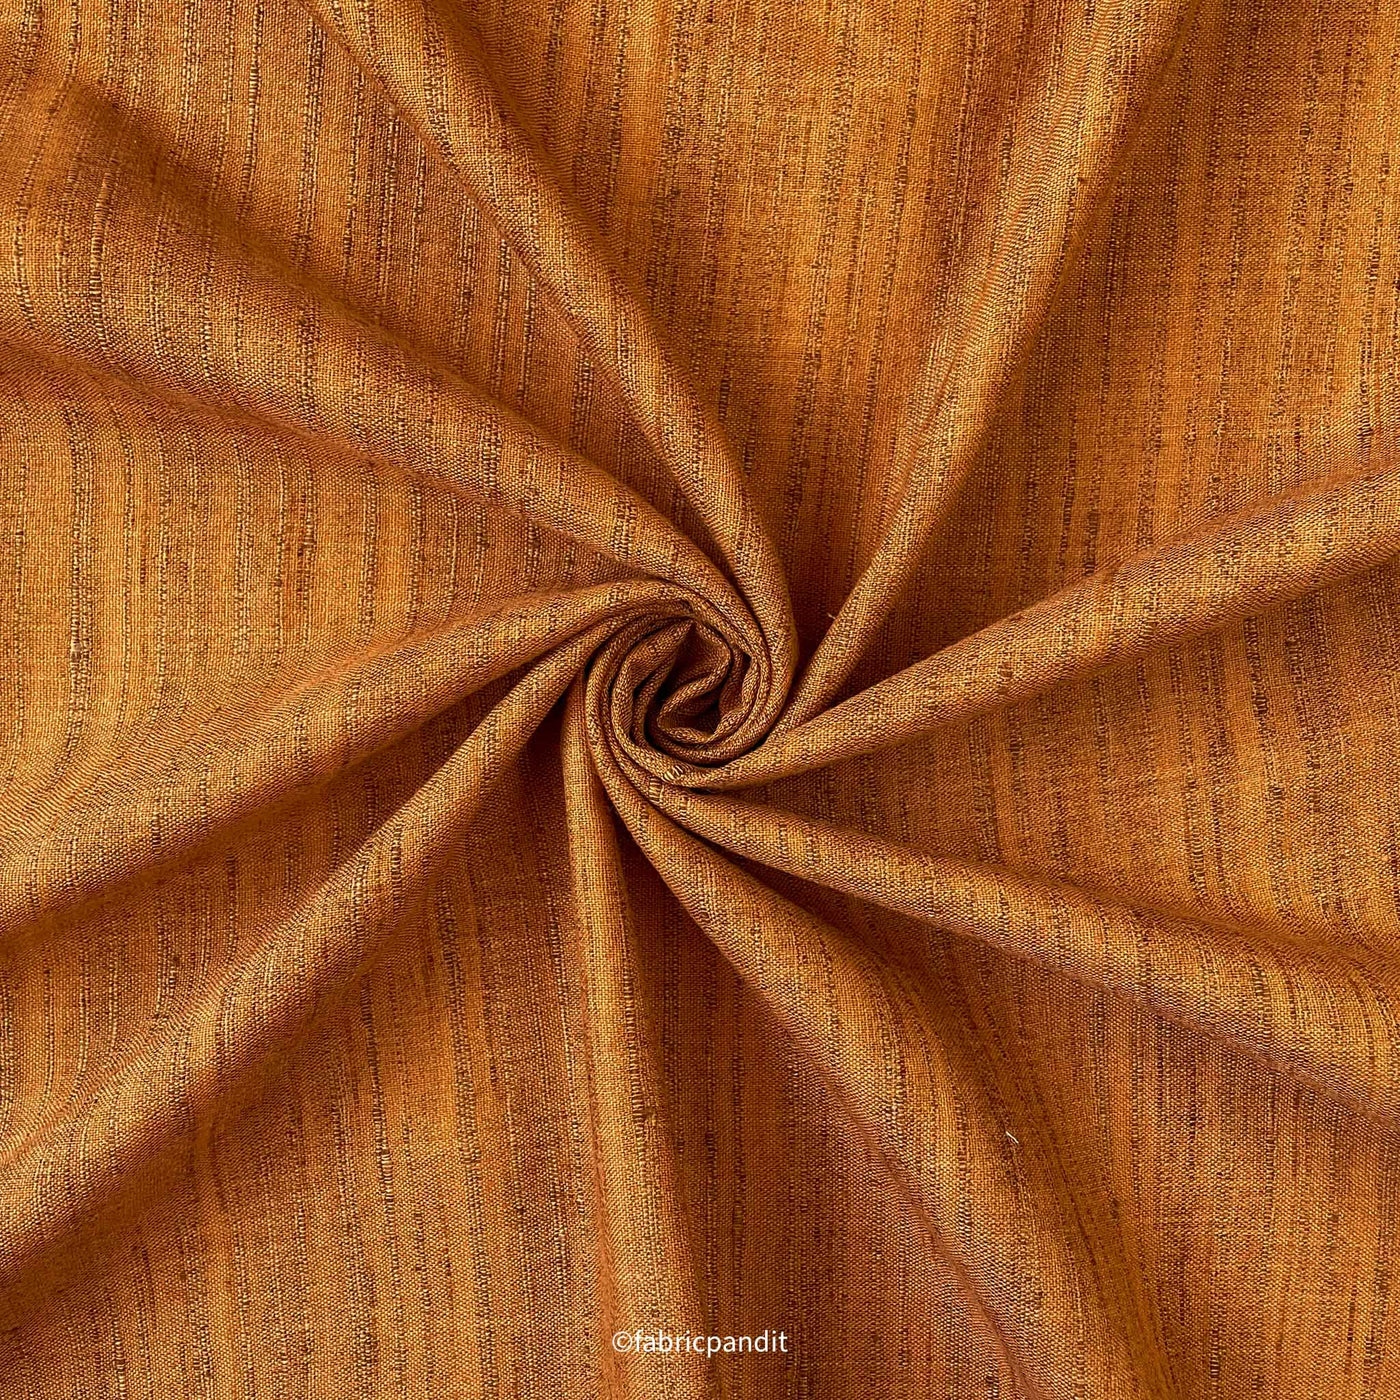 Fabric Pandit Fabric Rust Color Bhagalpuri Woven Cotton Slub Kurta Fabric (Width 58 Inches)